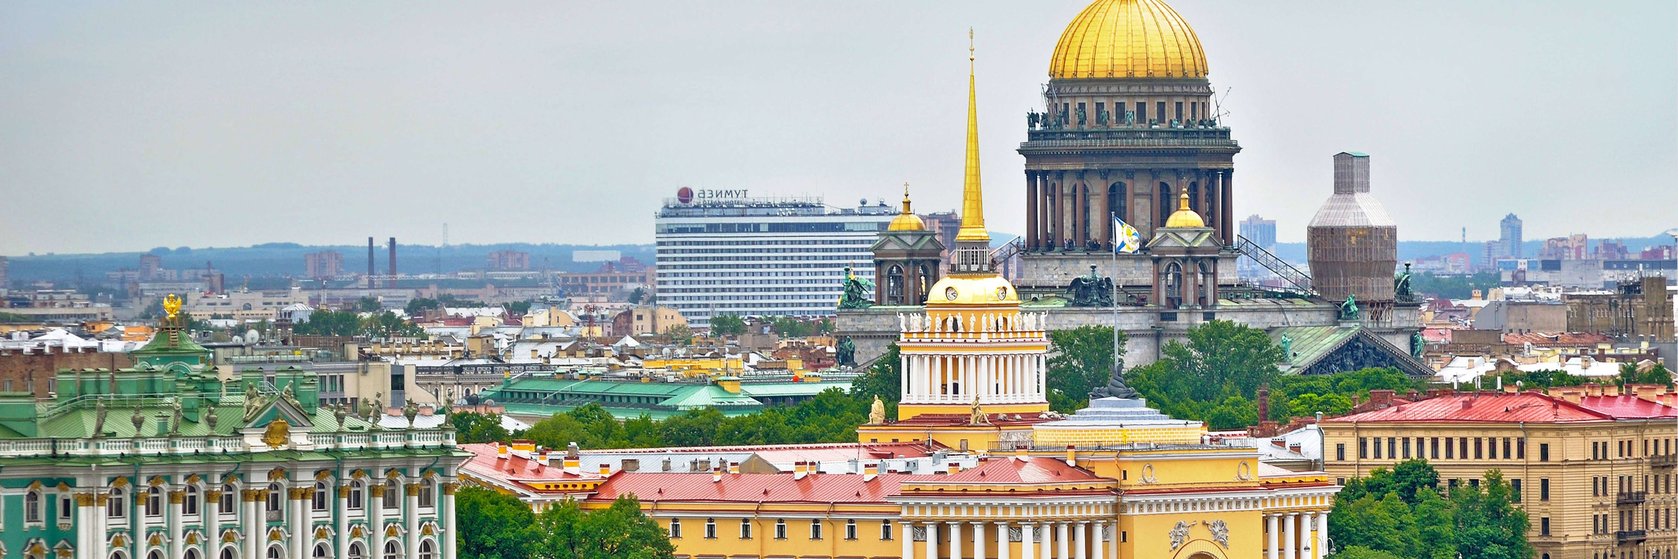 Hotely Rusko - Petrohrad a okolí